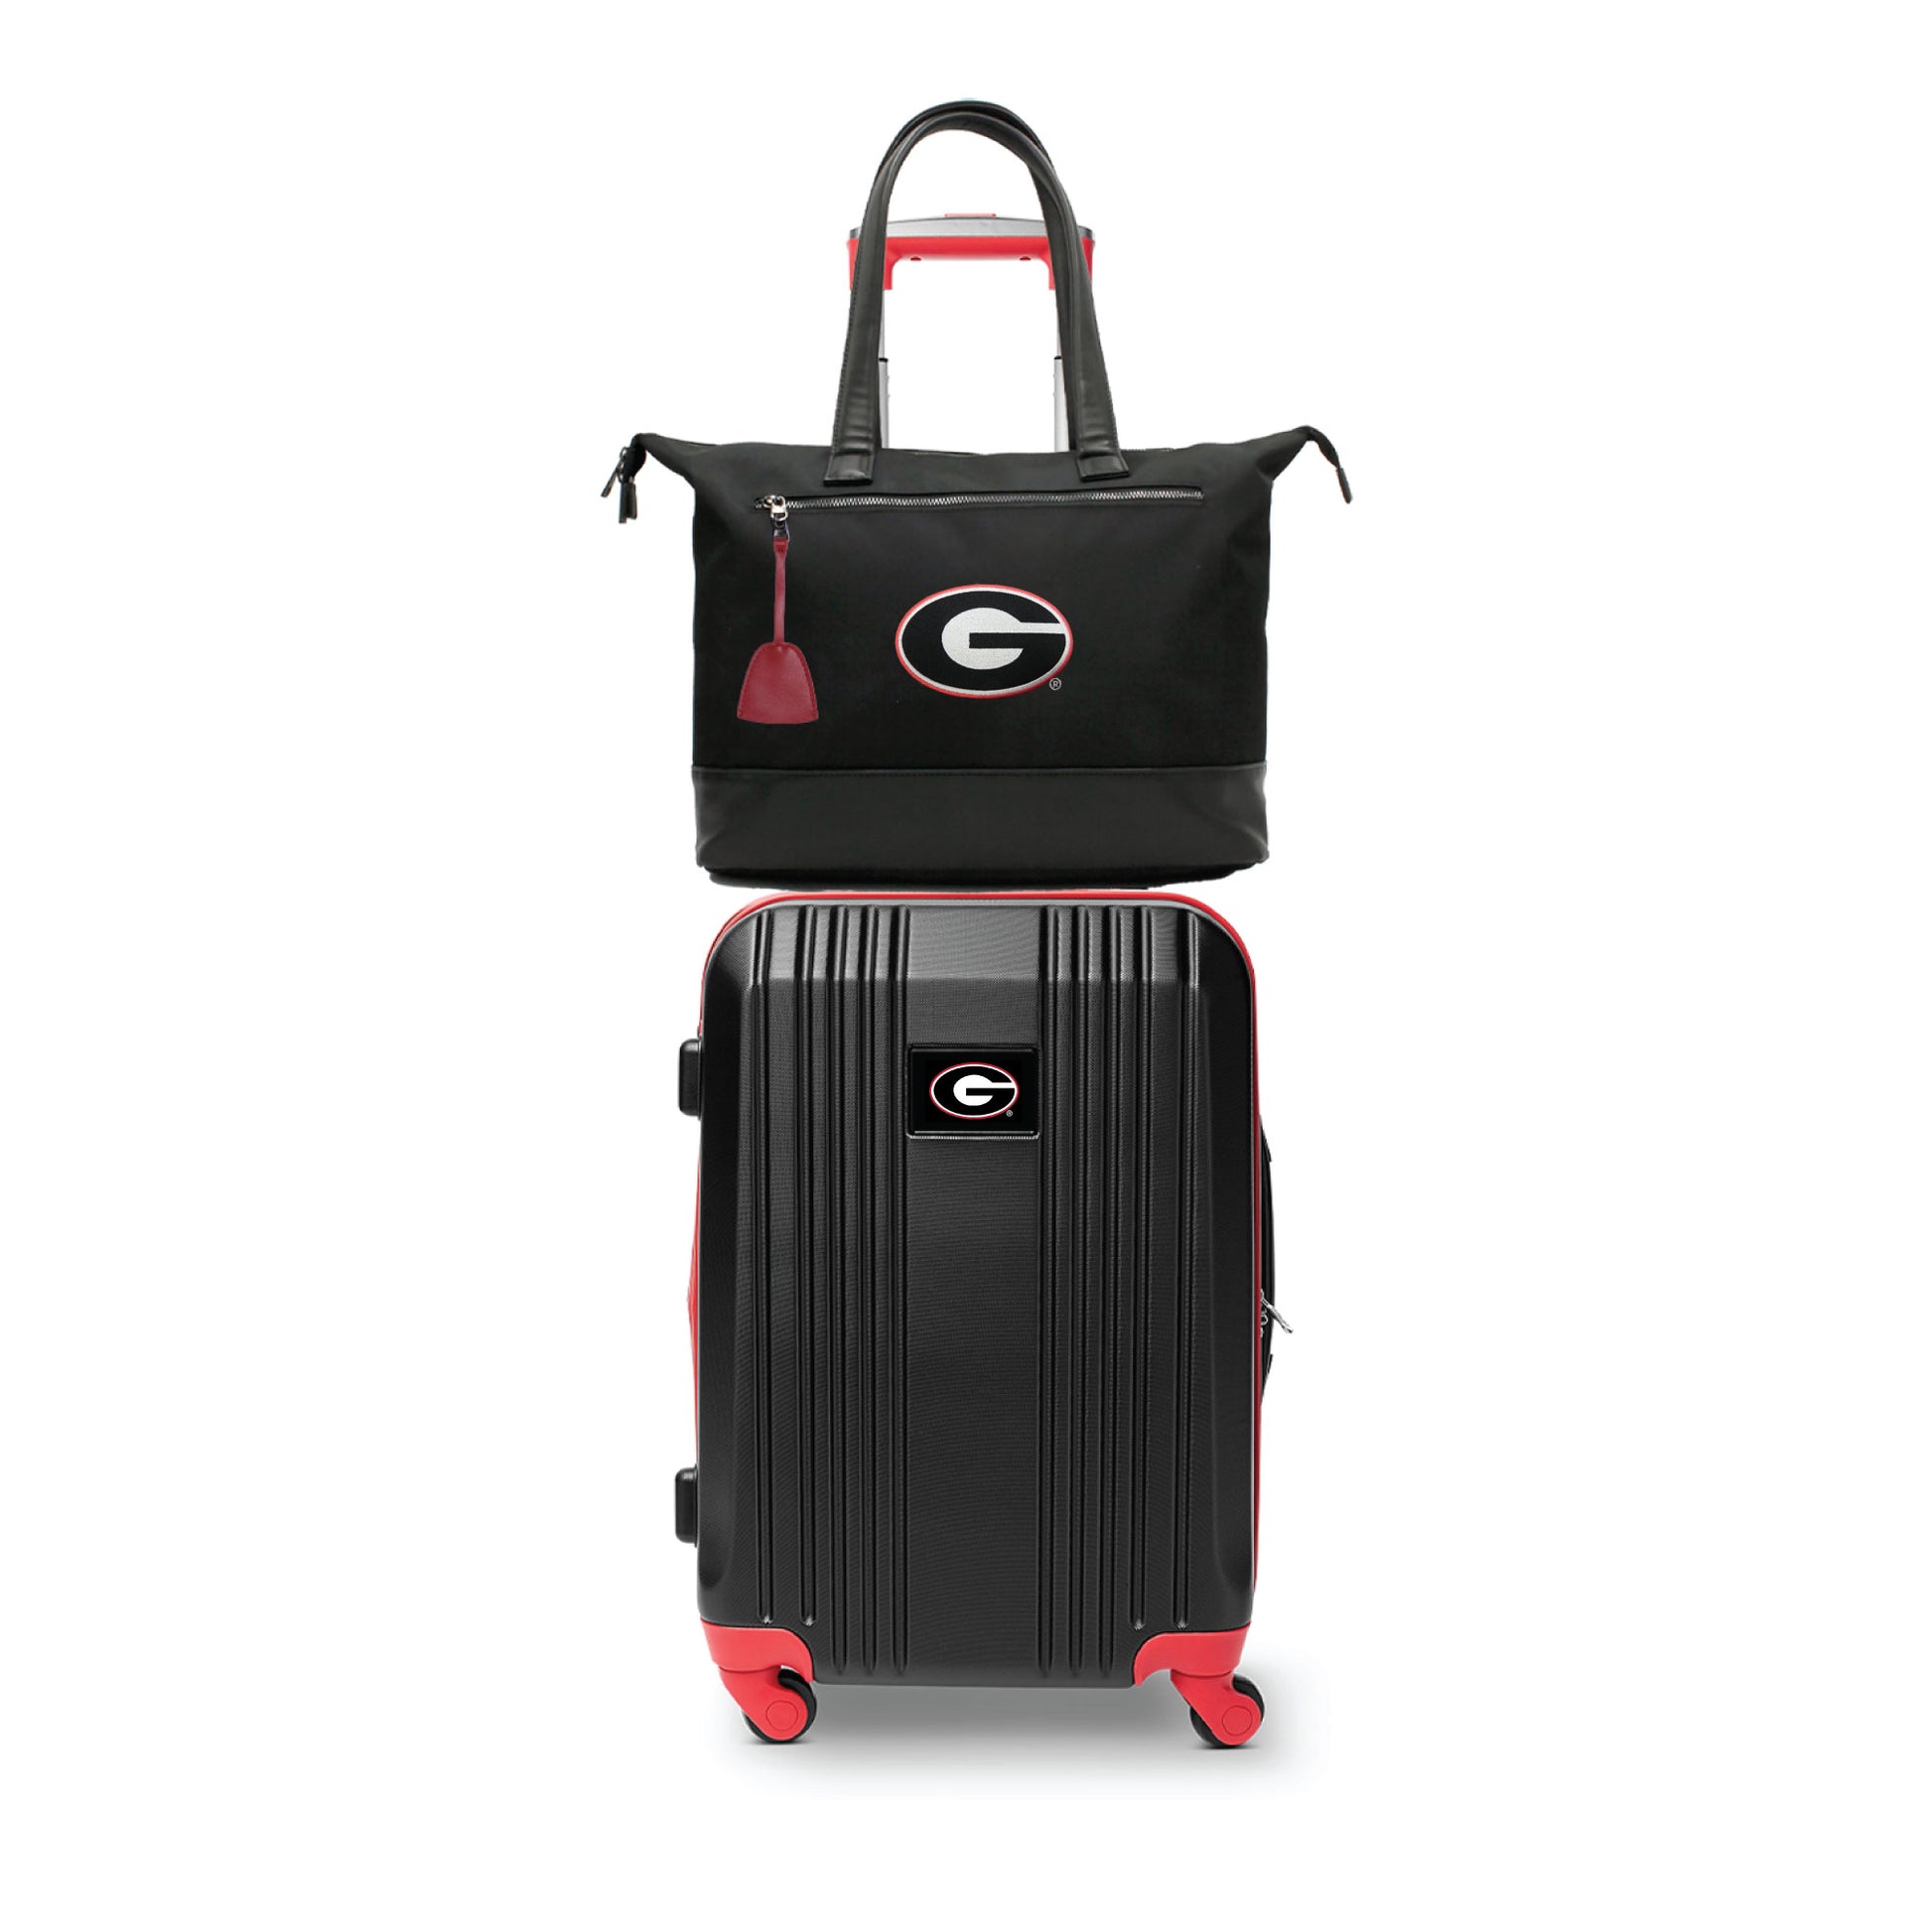 Georgia Bulldogs Premium Laptop Tote Bag and Luggage Set